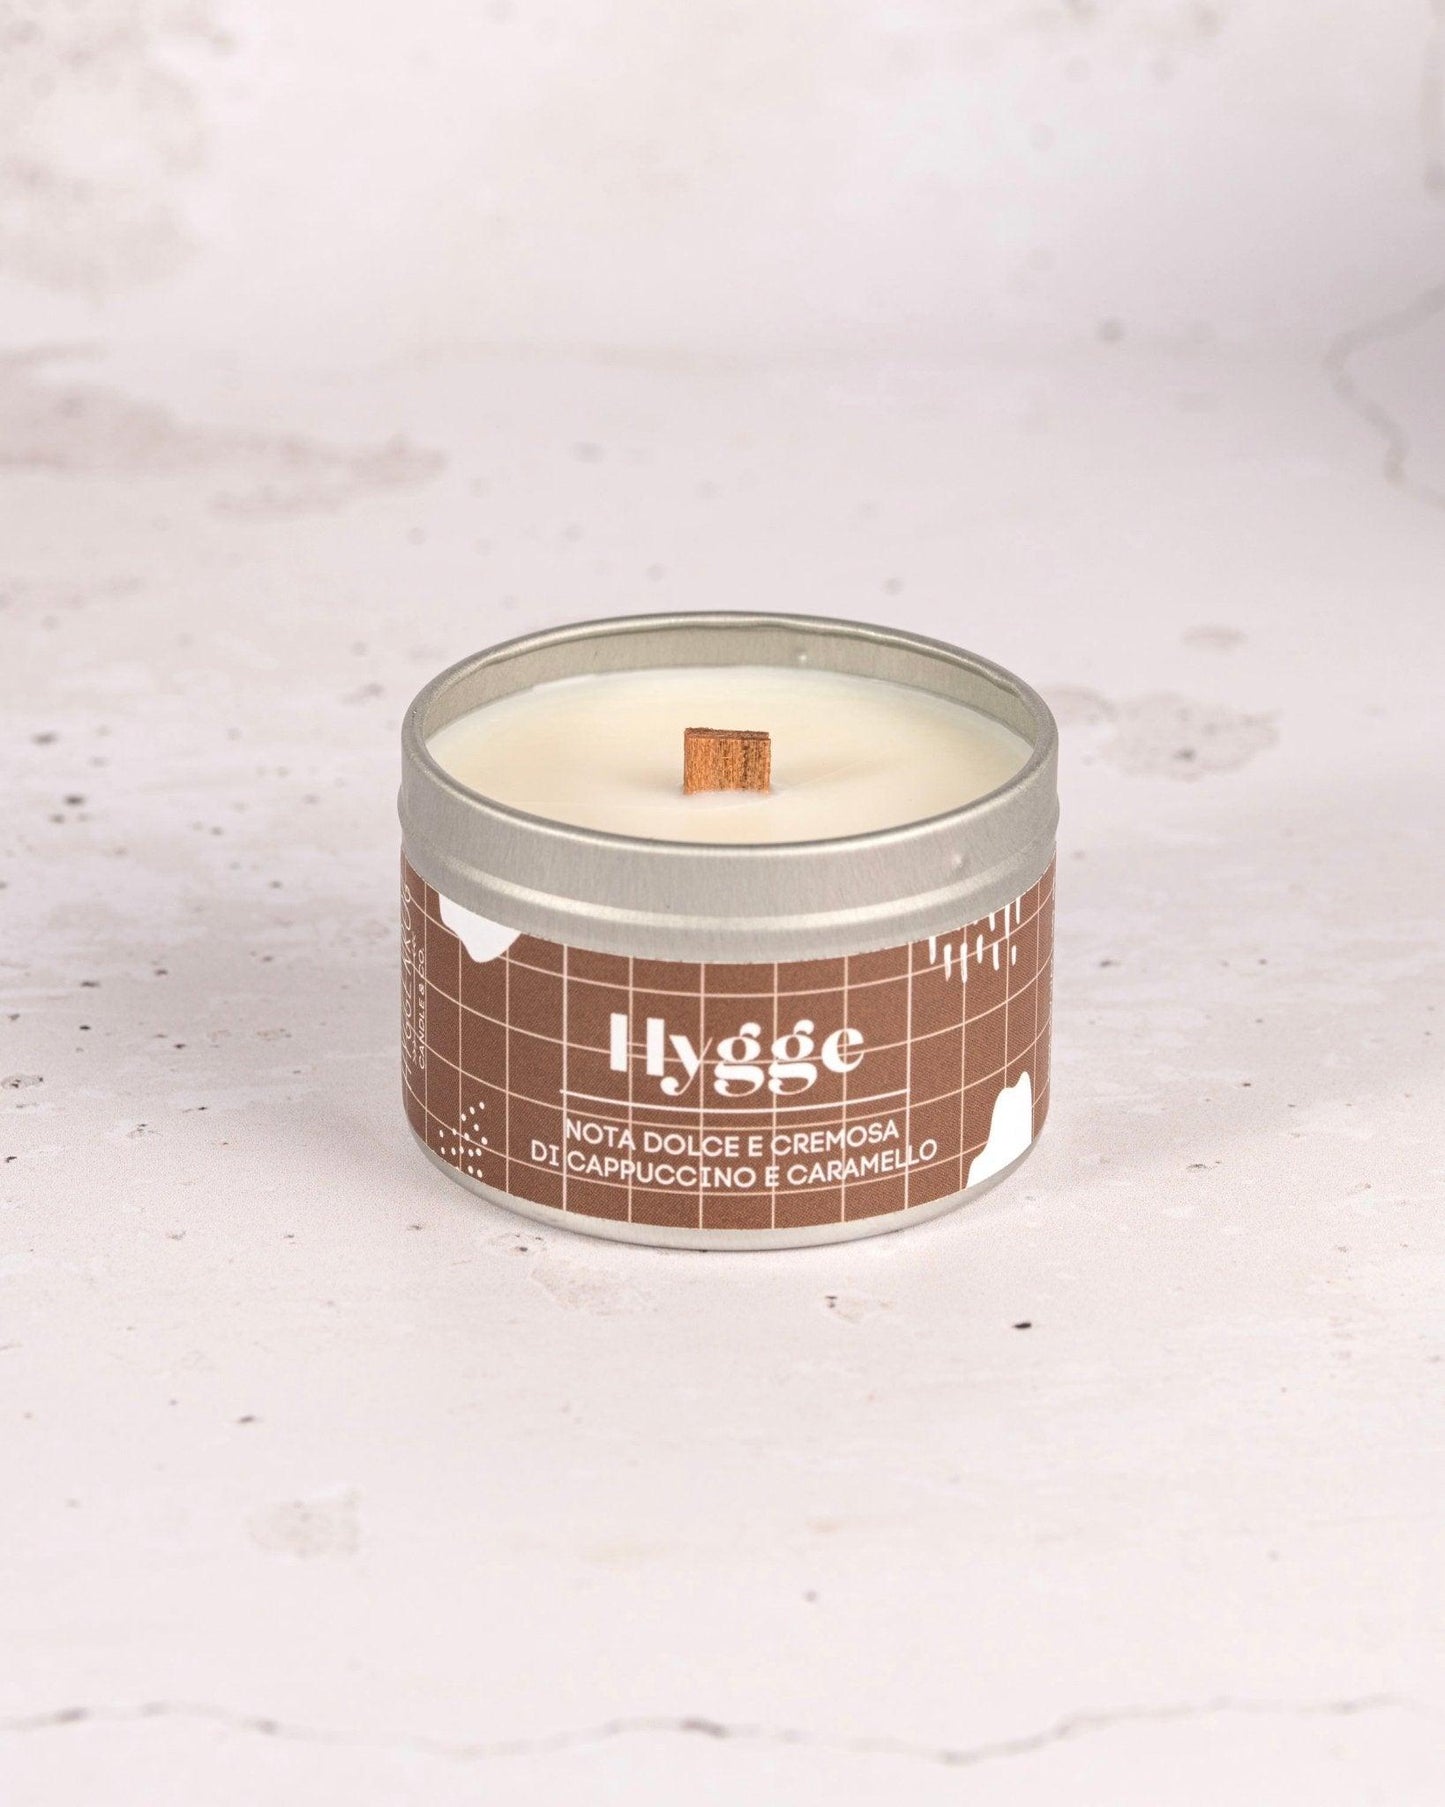 Candela Hygge | caramello e cappuccino - Hyggekrog - Candle&Co